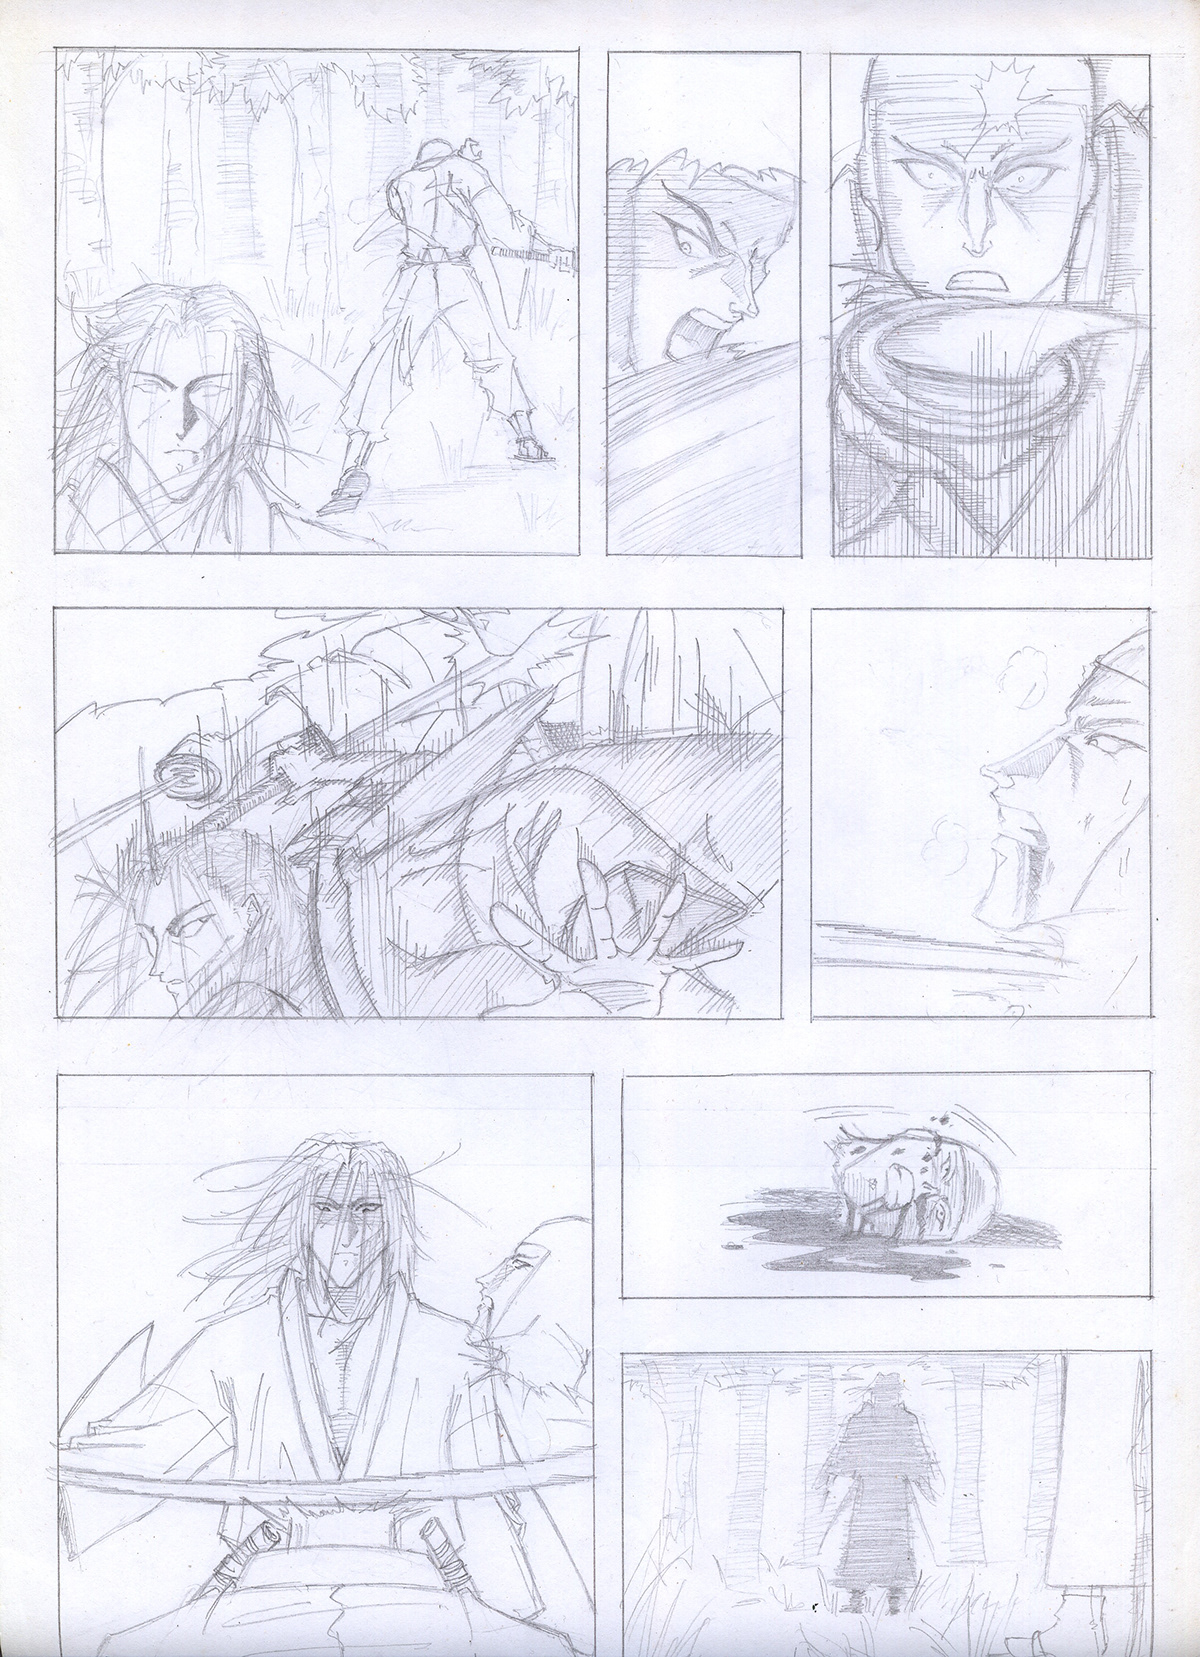 manga comic samurai katana Sword japan ILLUSTRATION  sketch Drawing  hand drawing